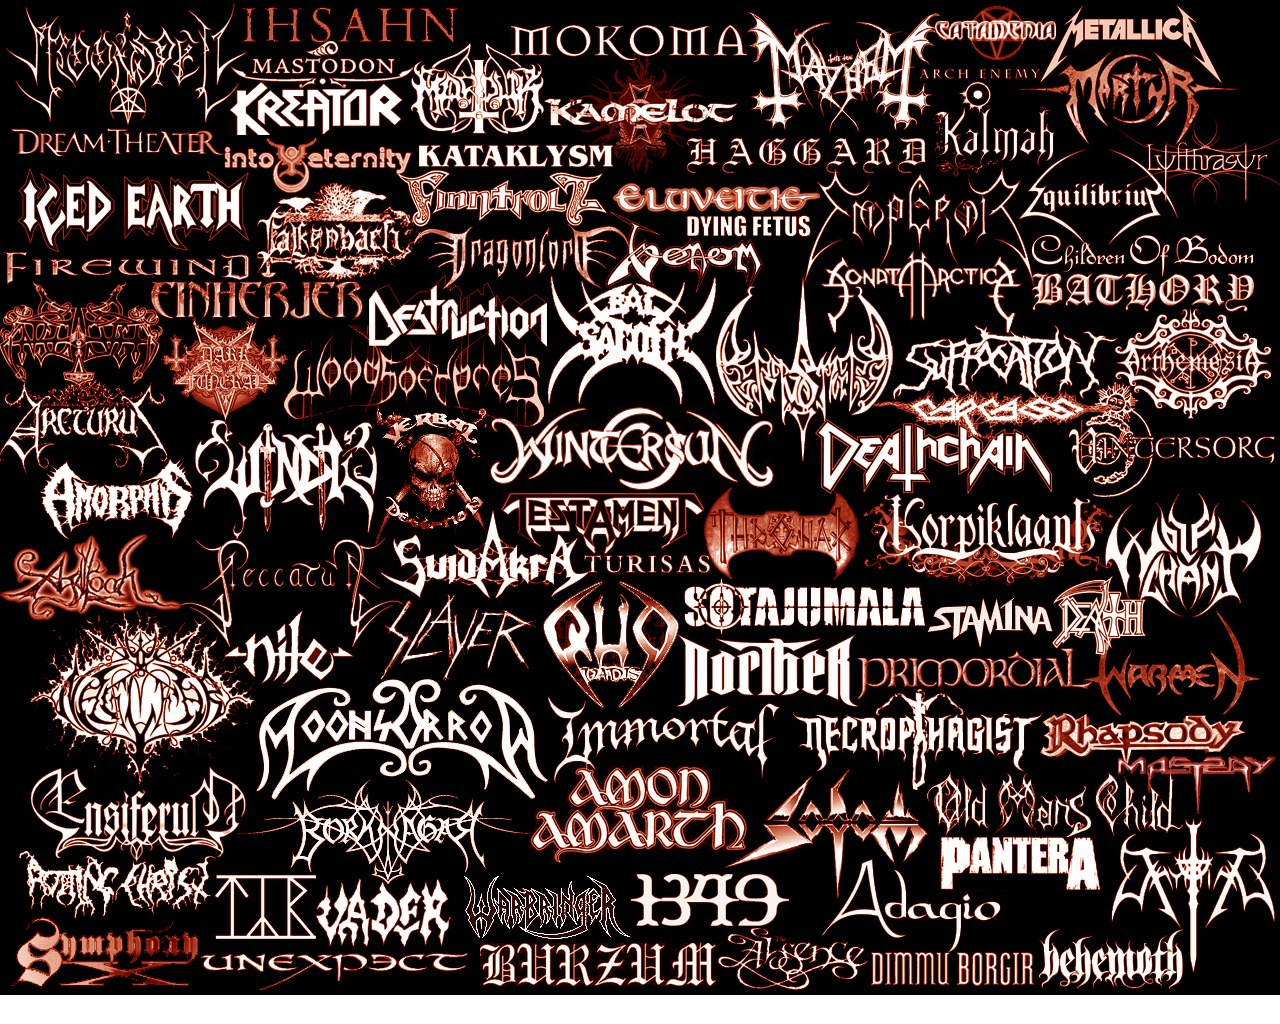 Metalcore bands